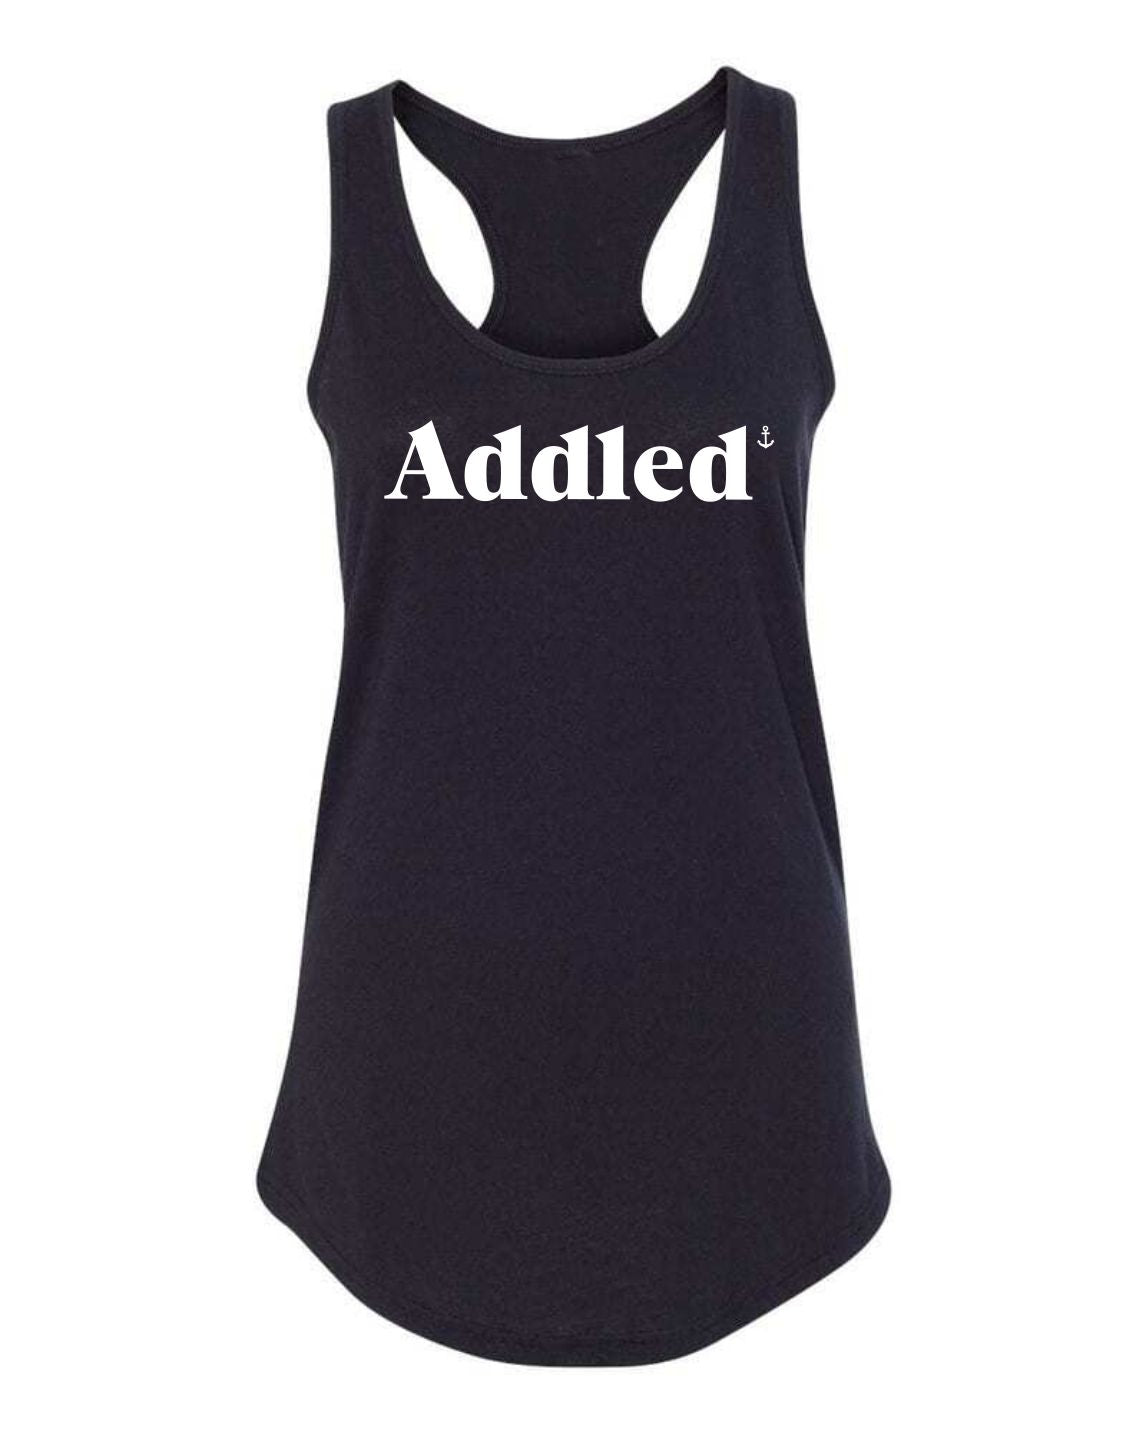 "Addled" Ladies' Tank Top